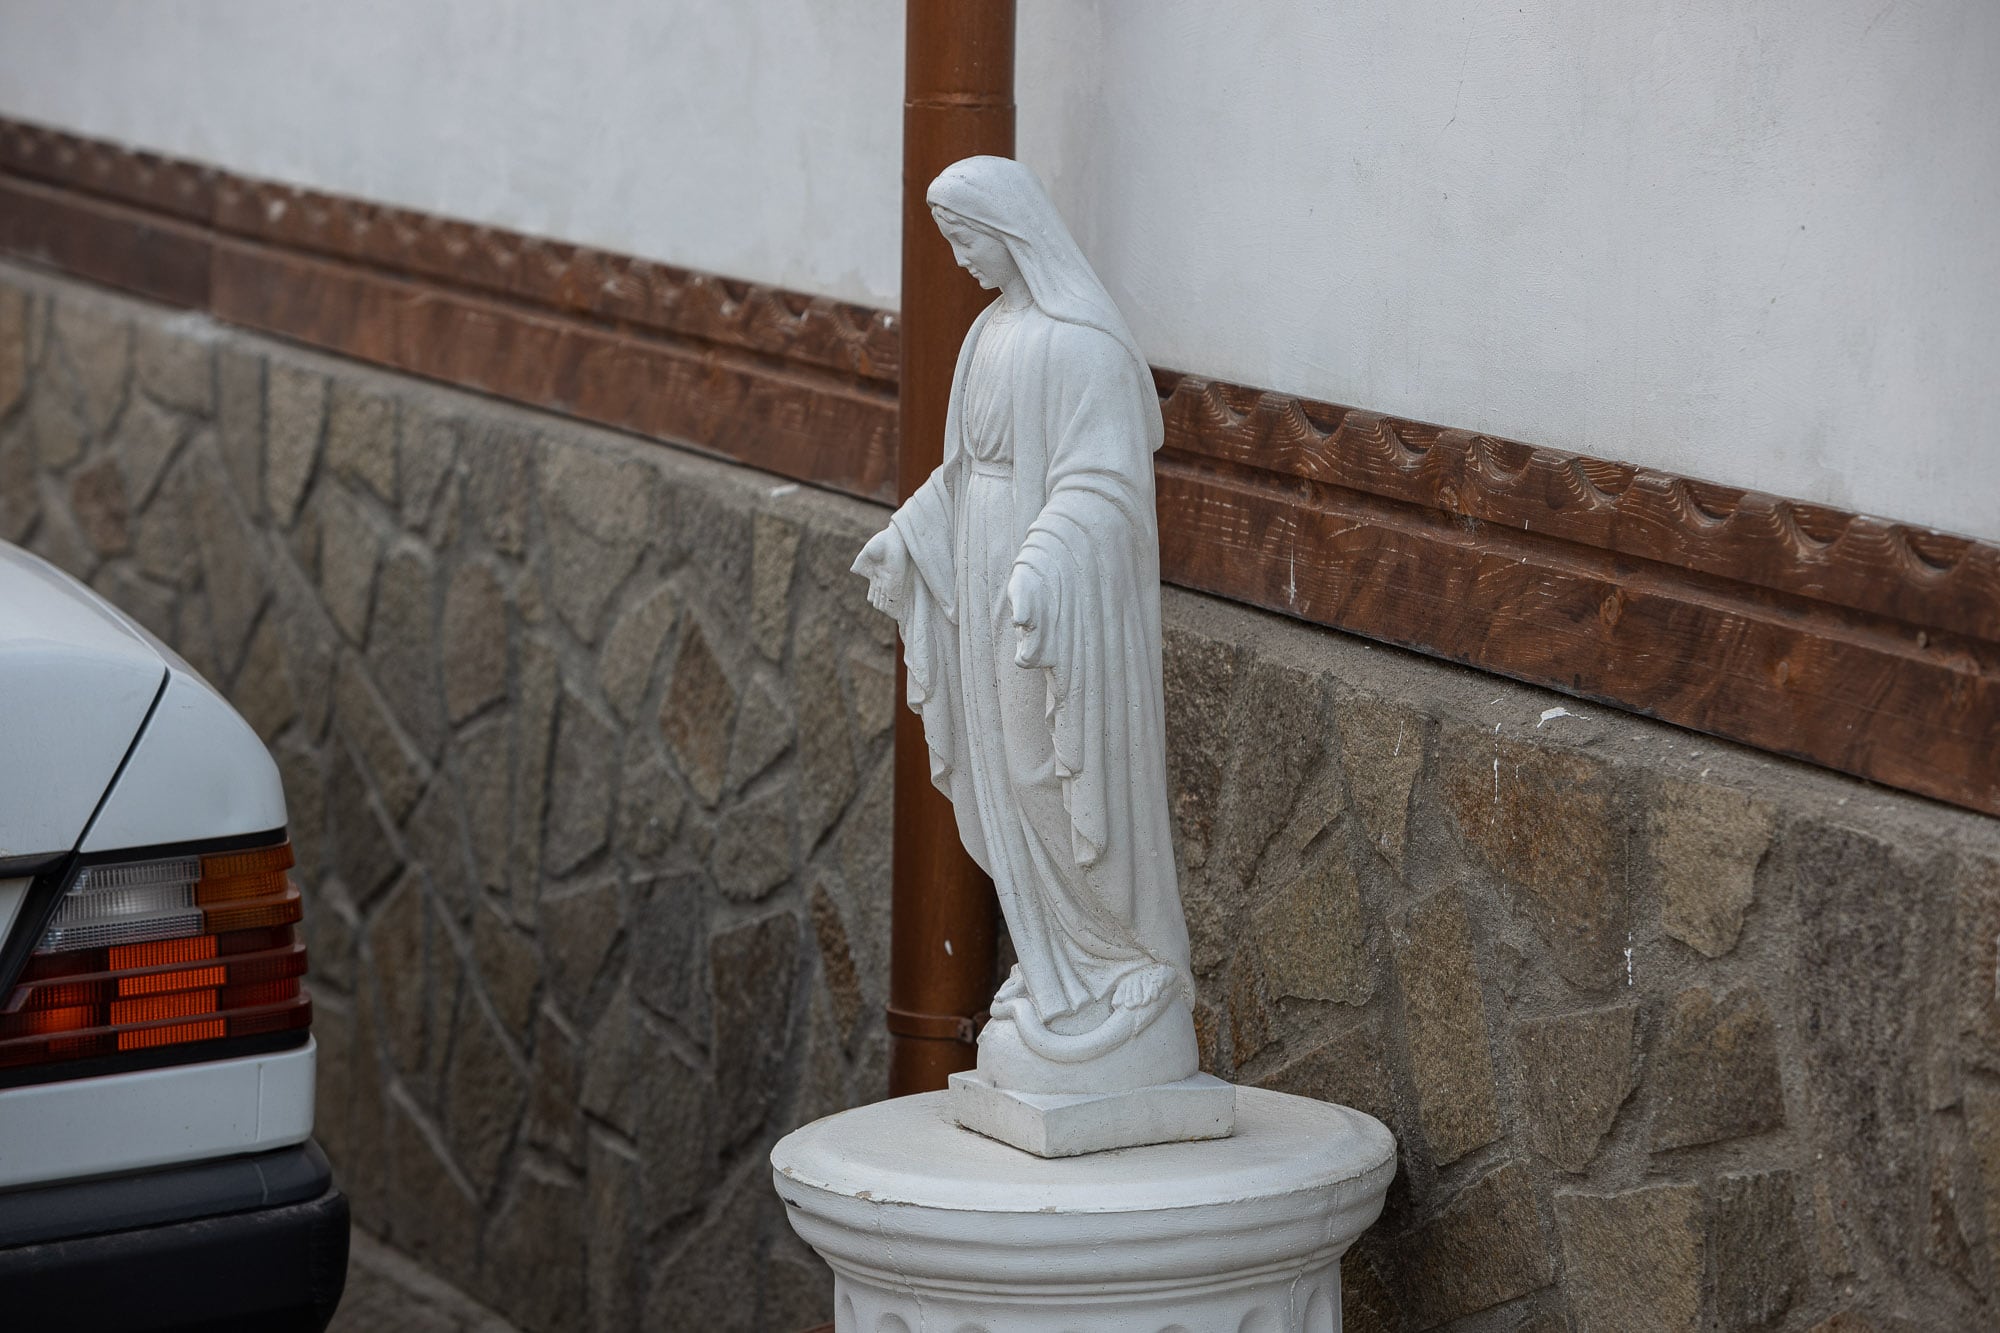 figurine of the Virgin Mary